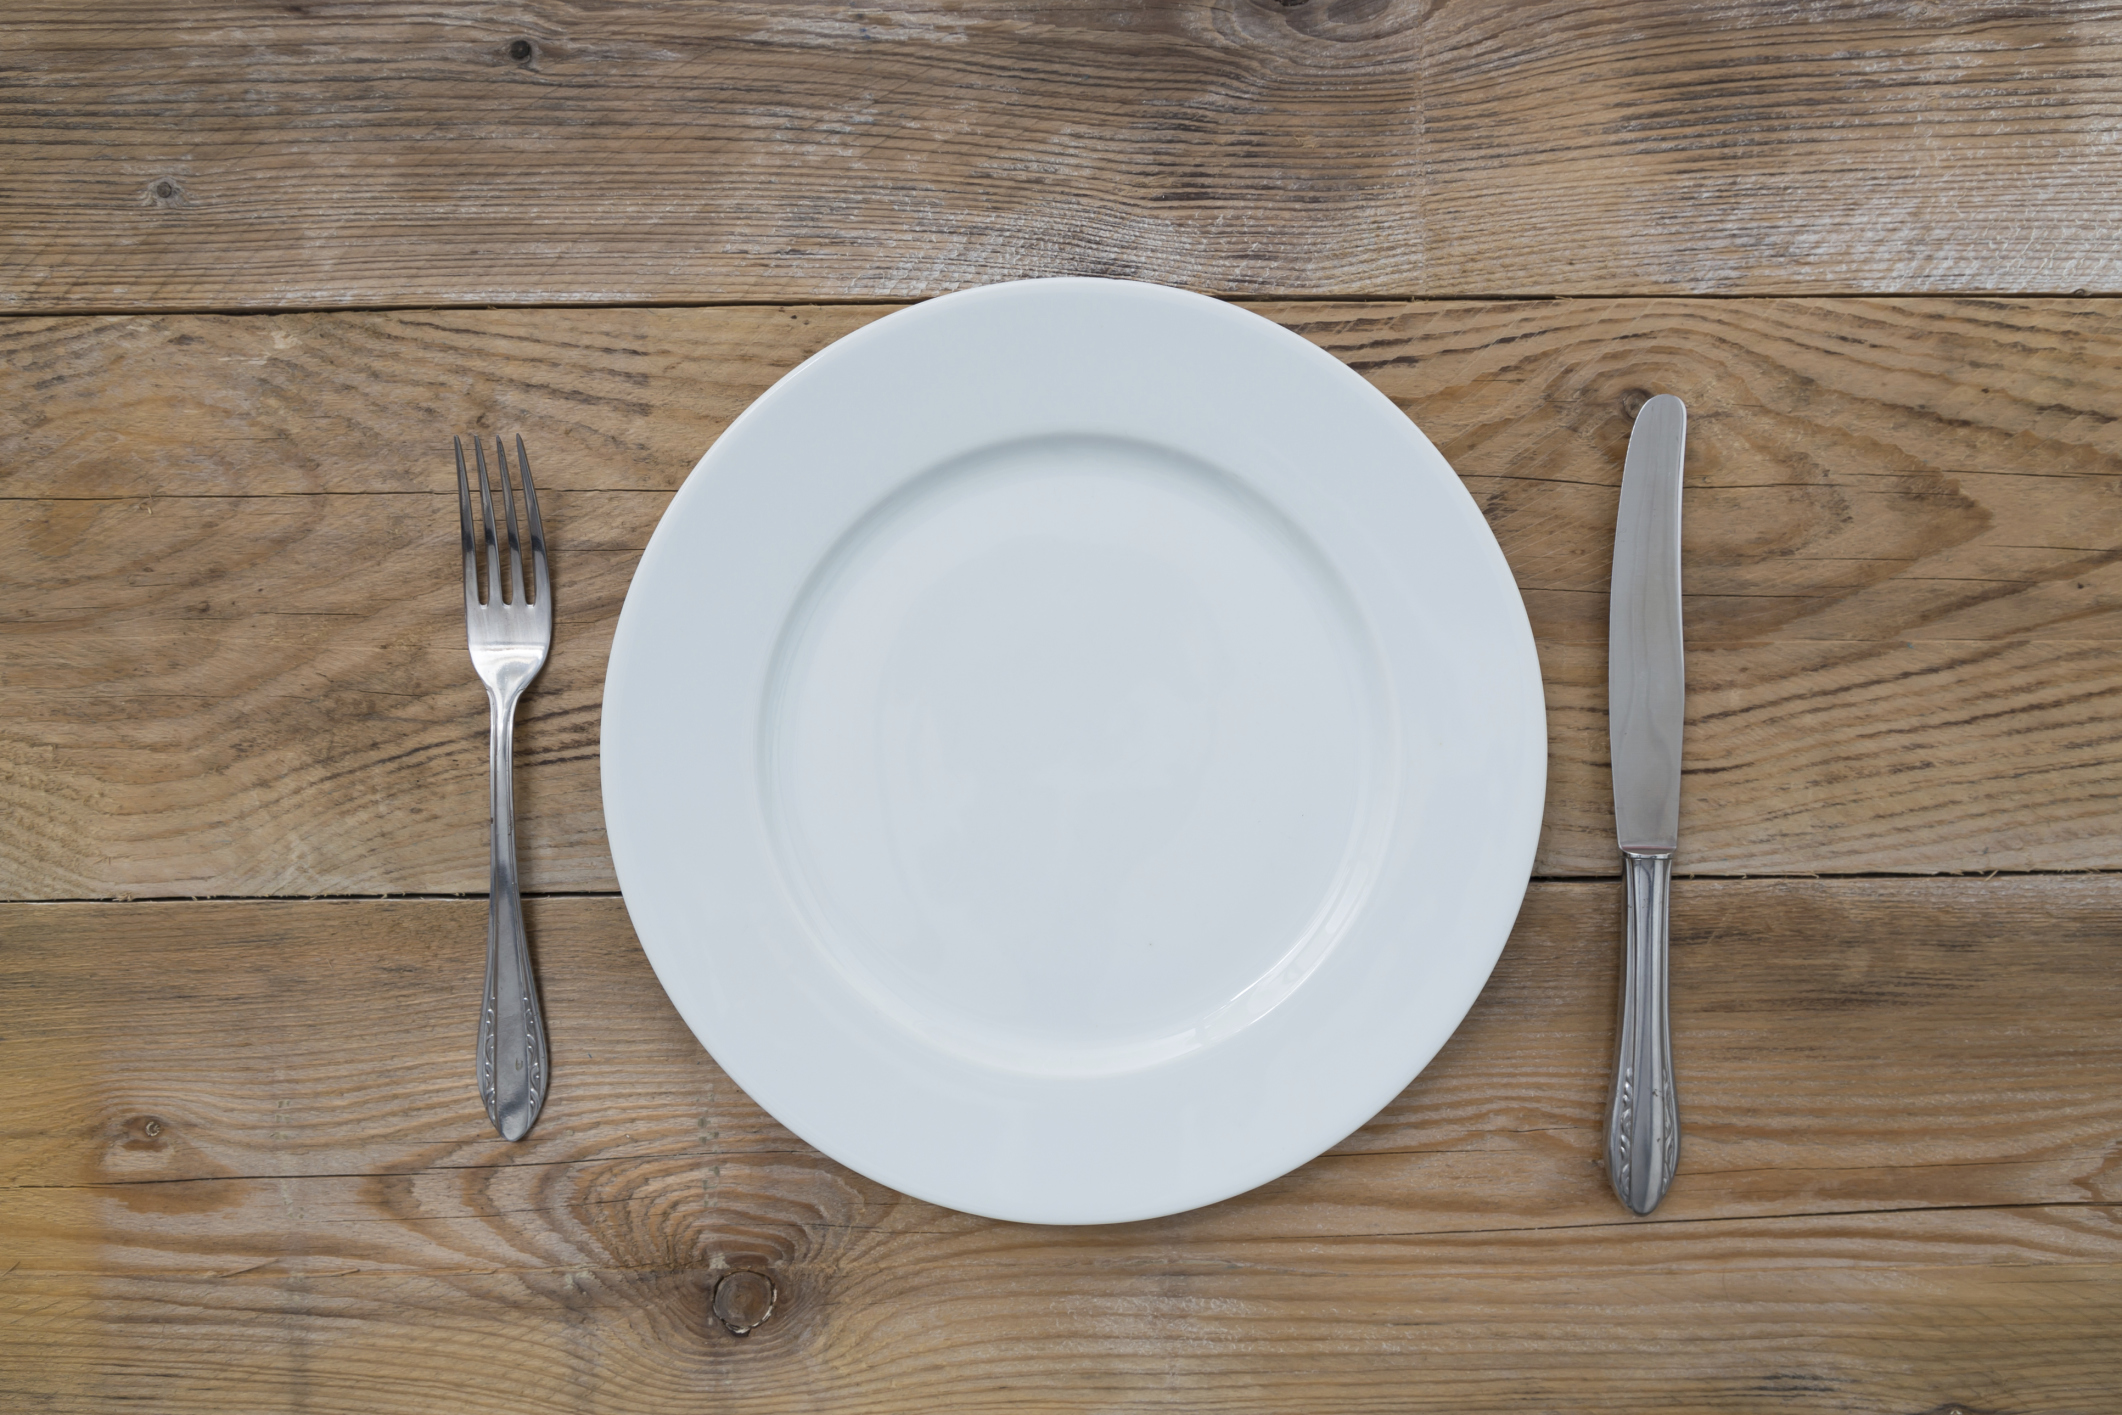 Лишняя тарелка на столе. Пустая тарелка на столе. Тарелка на столе. Белая тарелка с приборами. Тарелка на столе сверху.